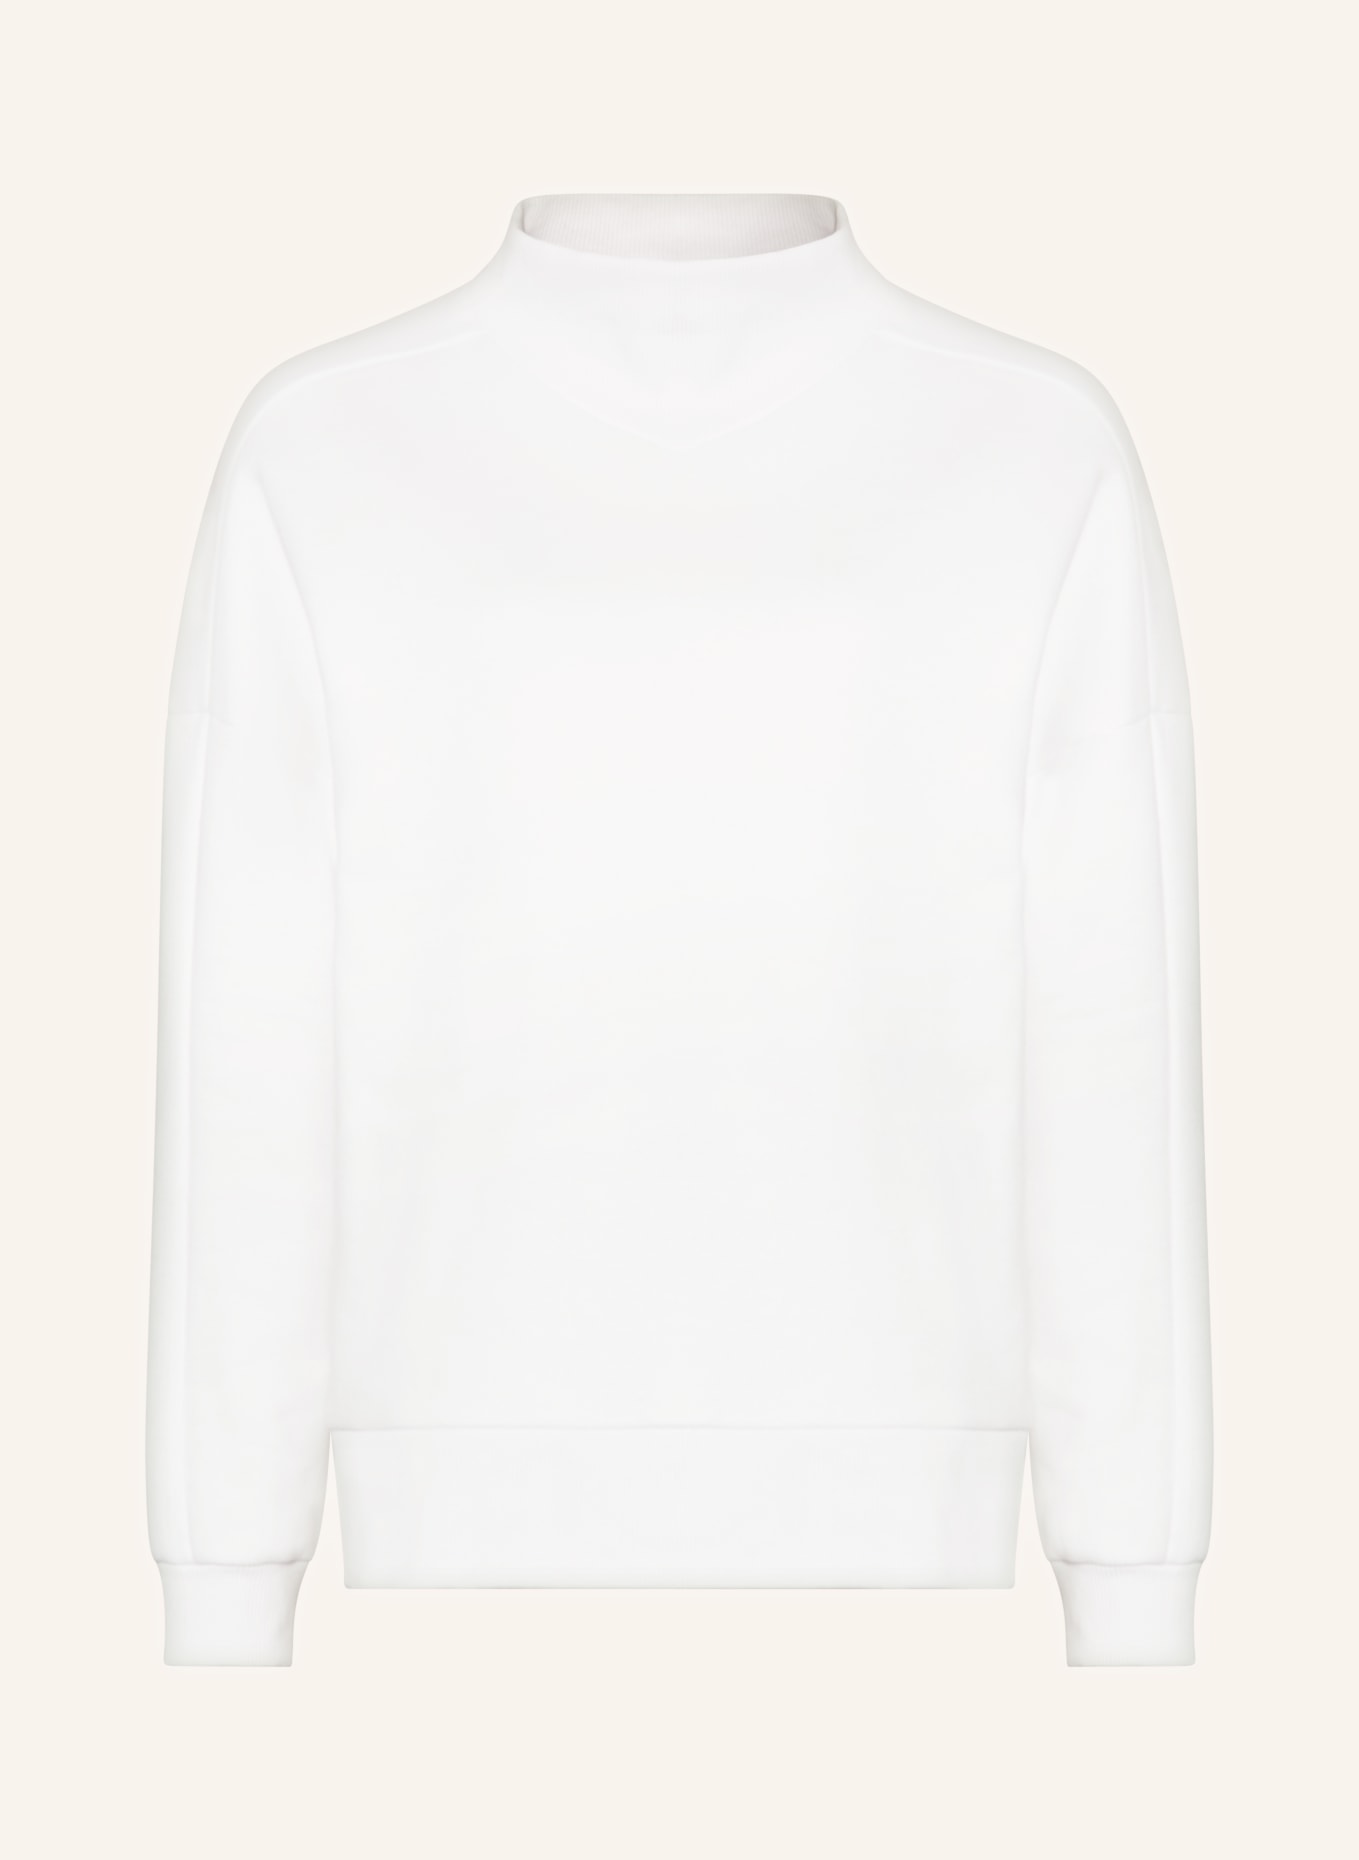 ELBSAND Sweatshirt TUUJA, Farbe: WEISS (Bild 1)